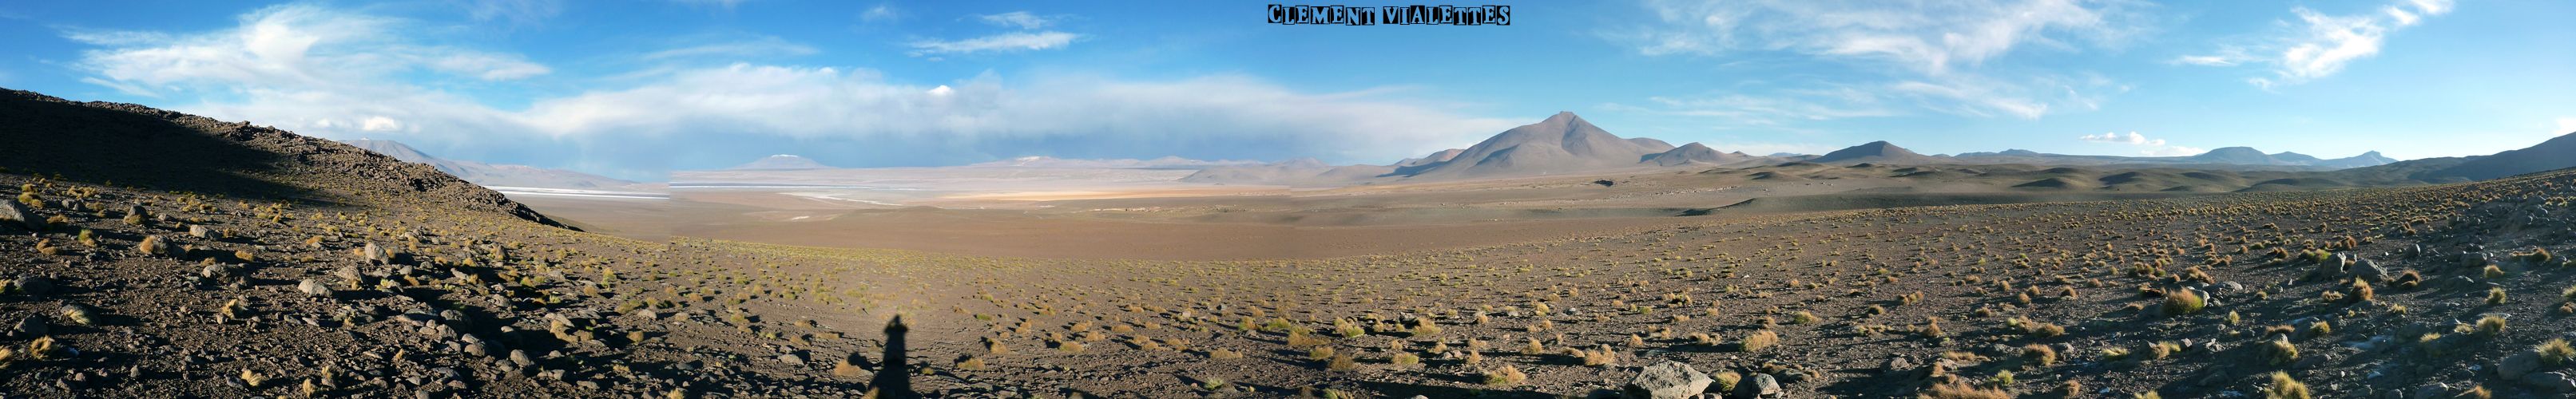 bolivie sud lipez les deserts panoramique